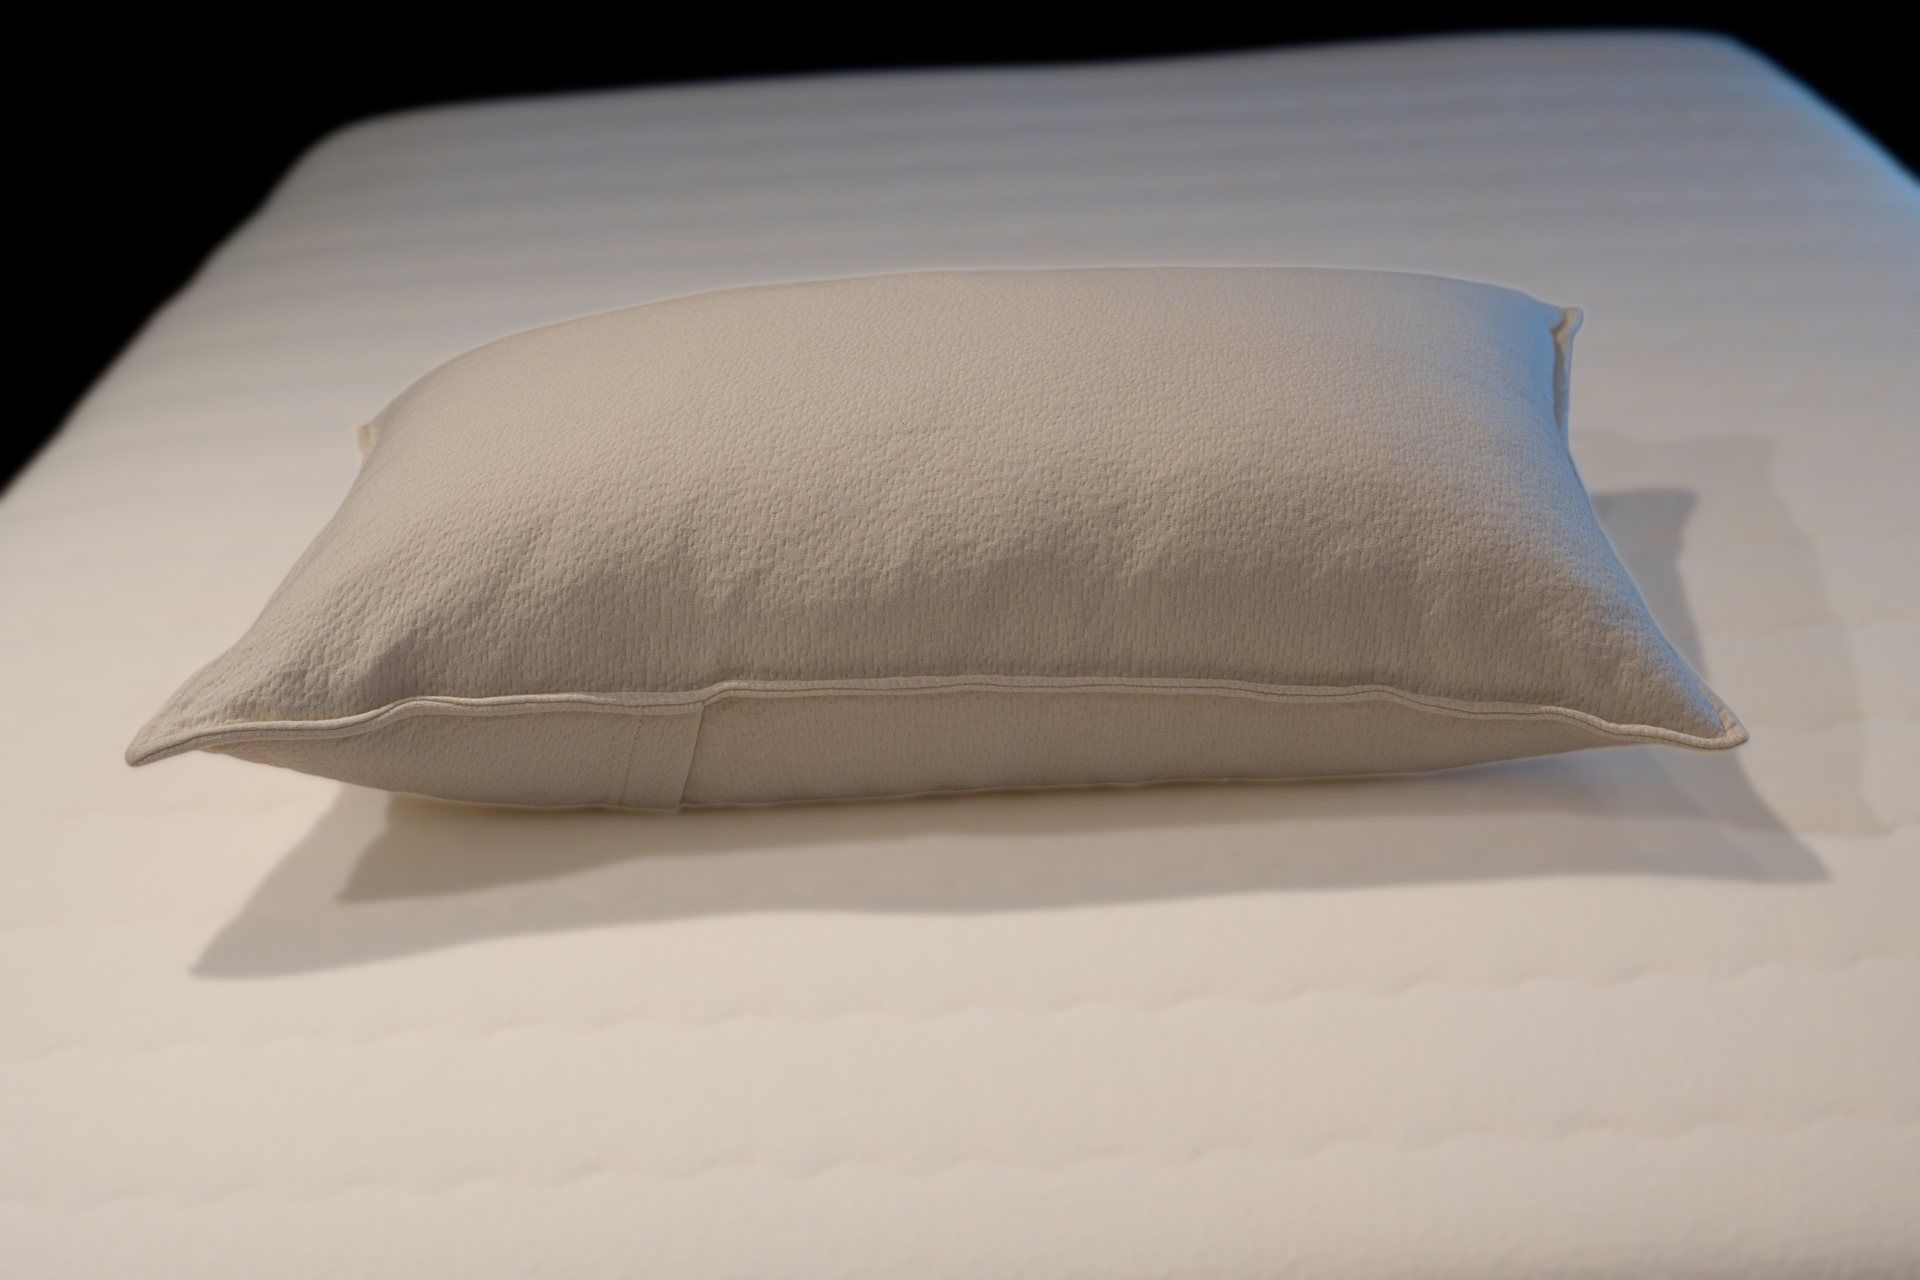 Wool-Latex Pillow